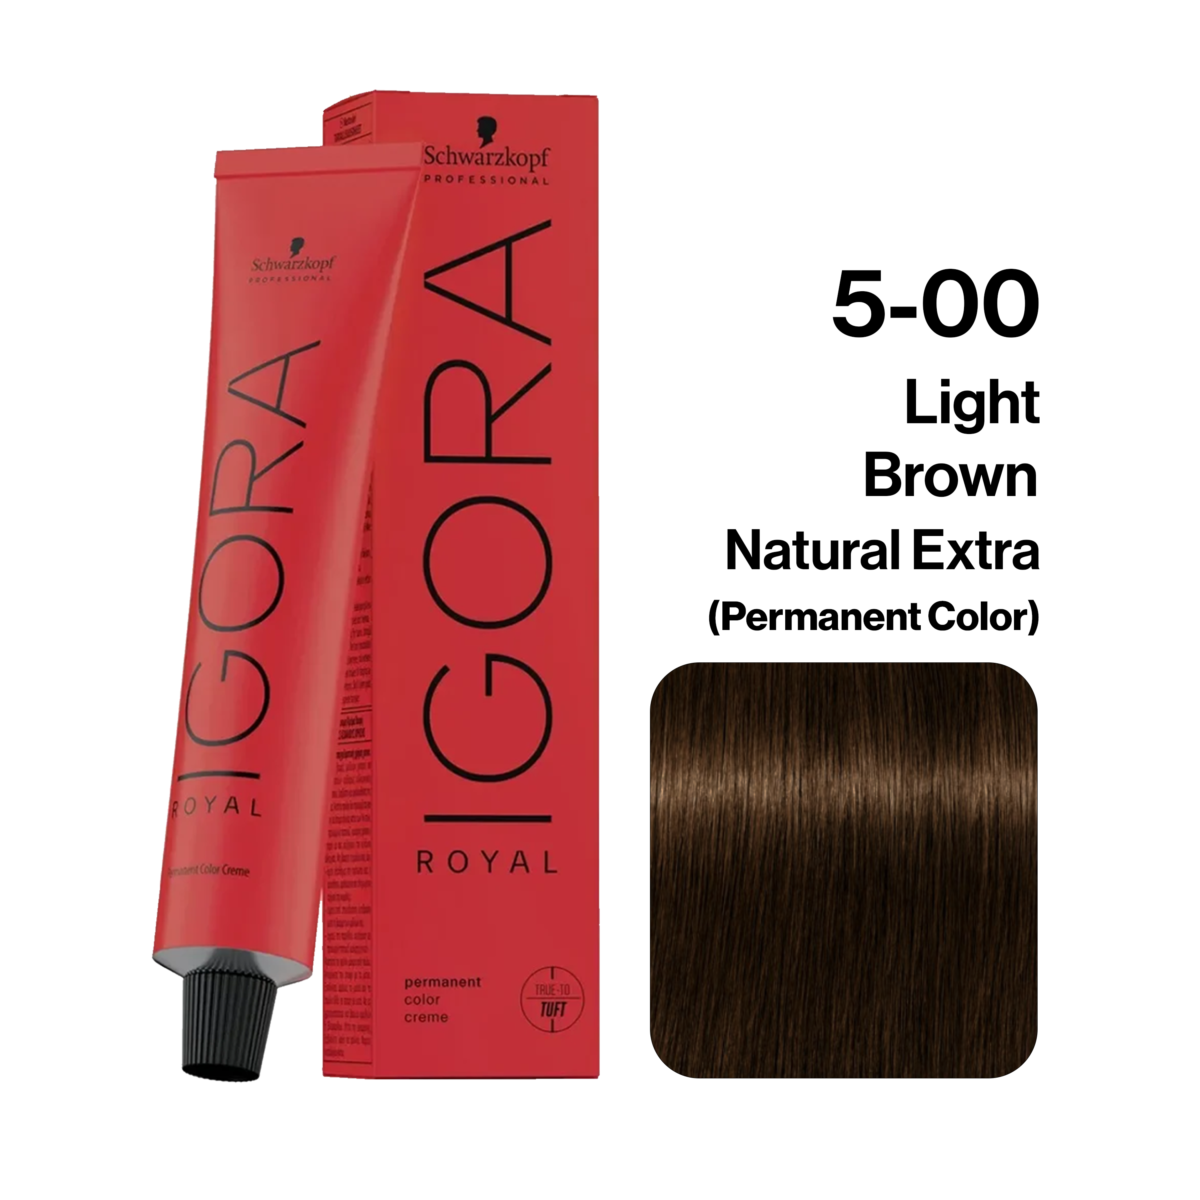 Schwarzkopf Igora Royal Hair Color, 5-00 Light Brown Natural Extra 60ml